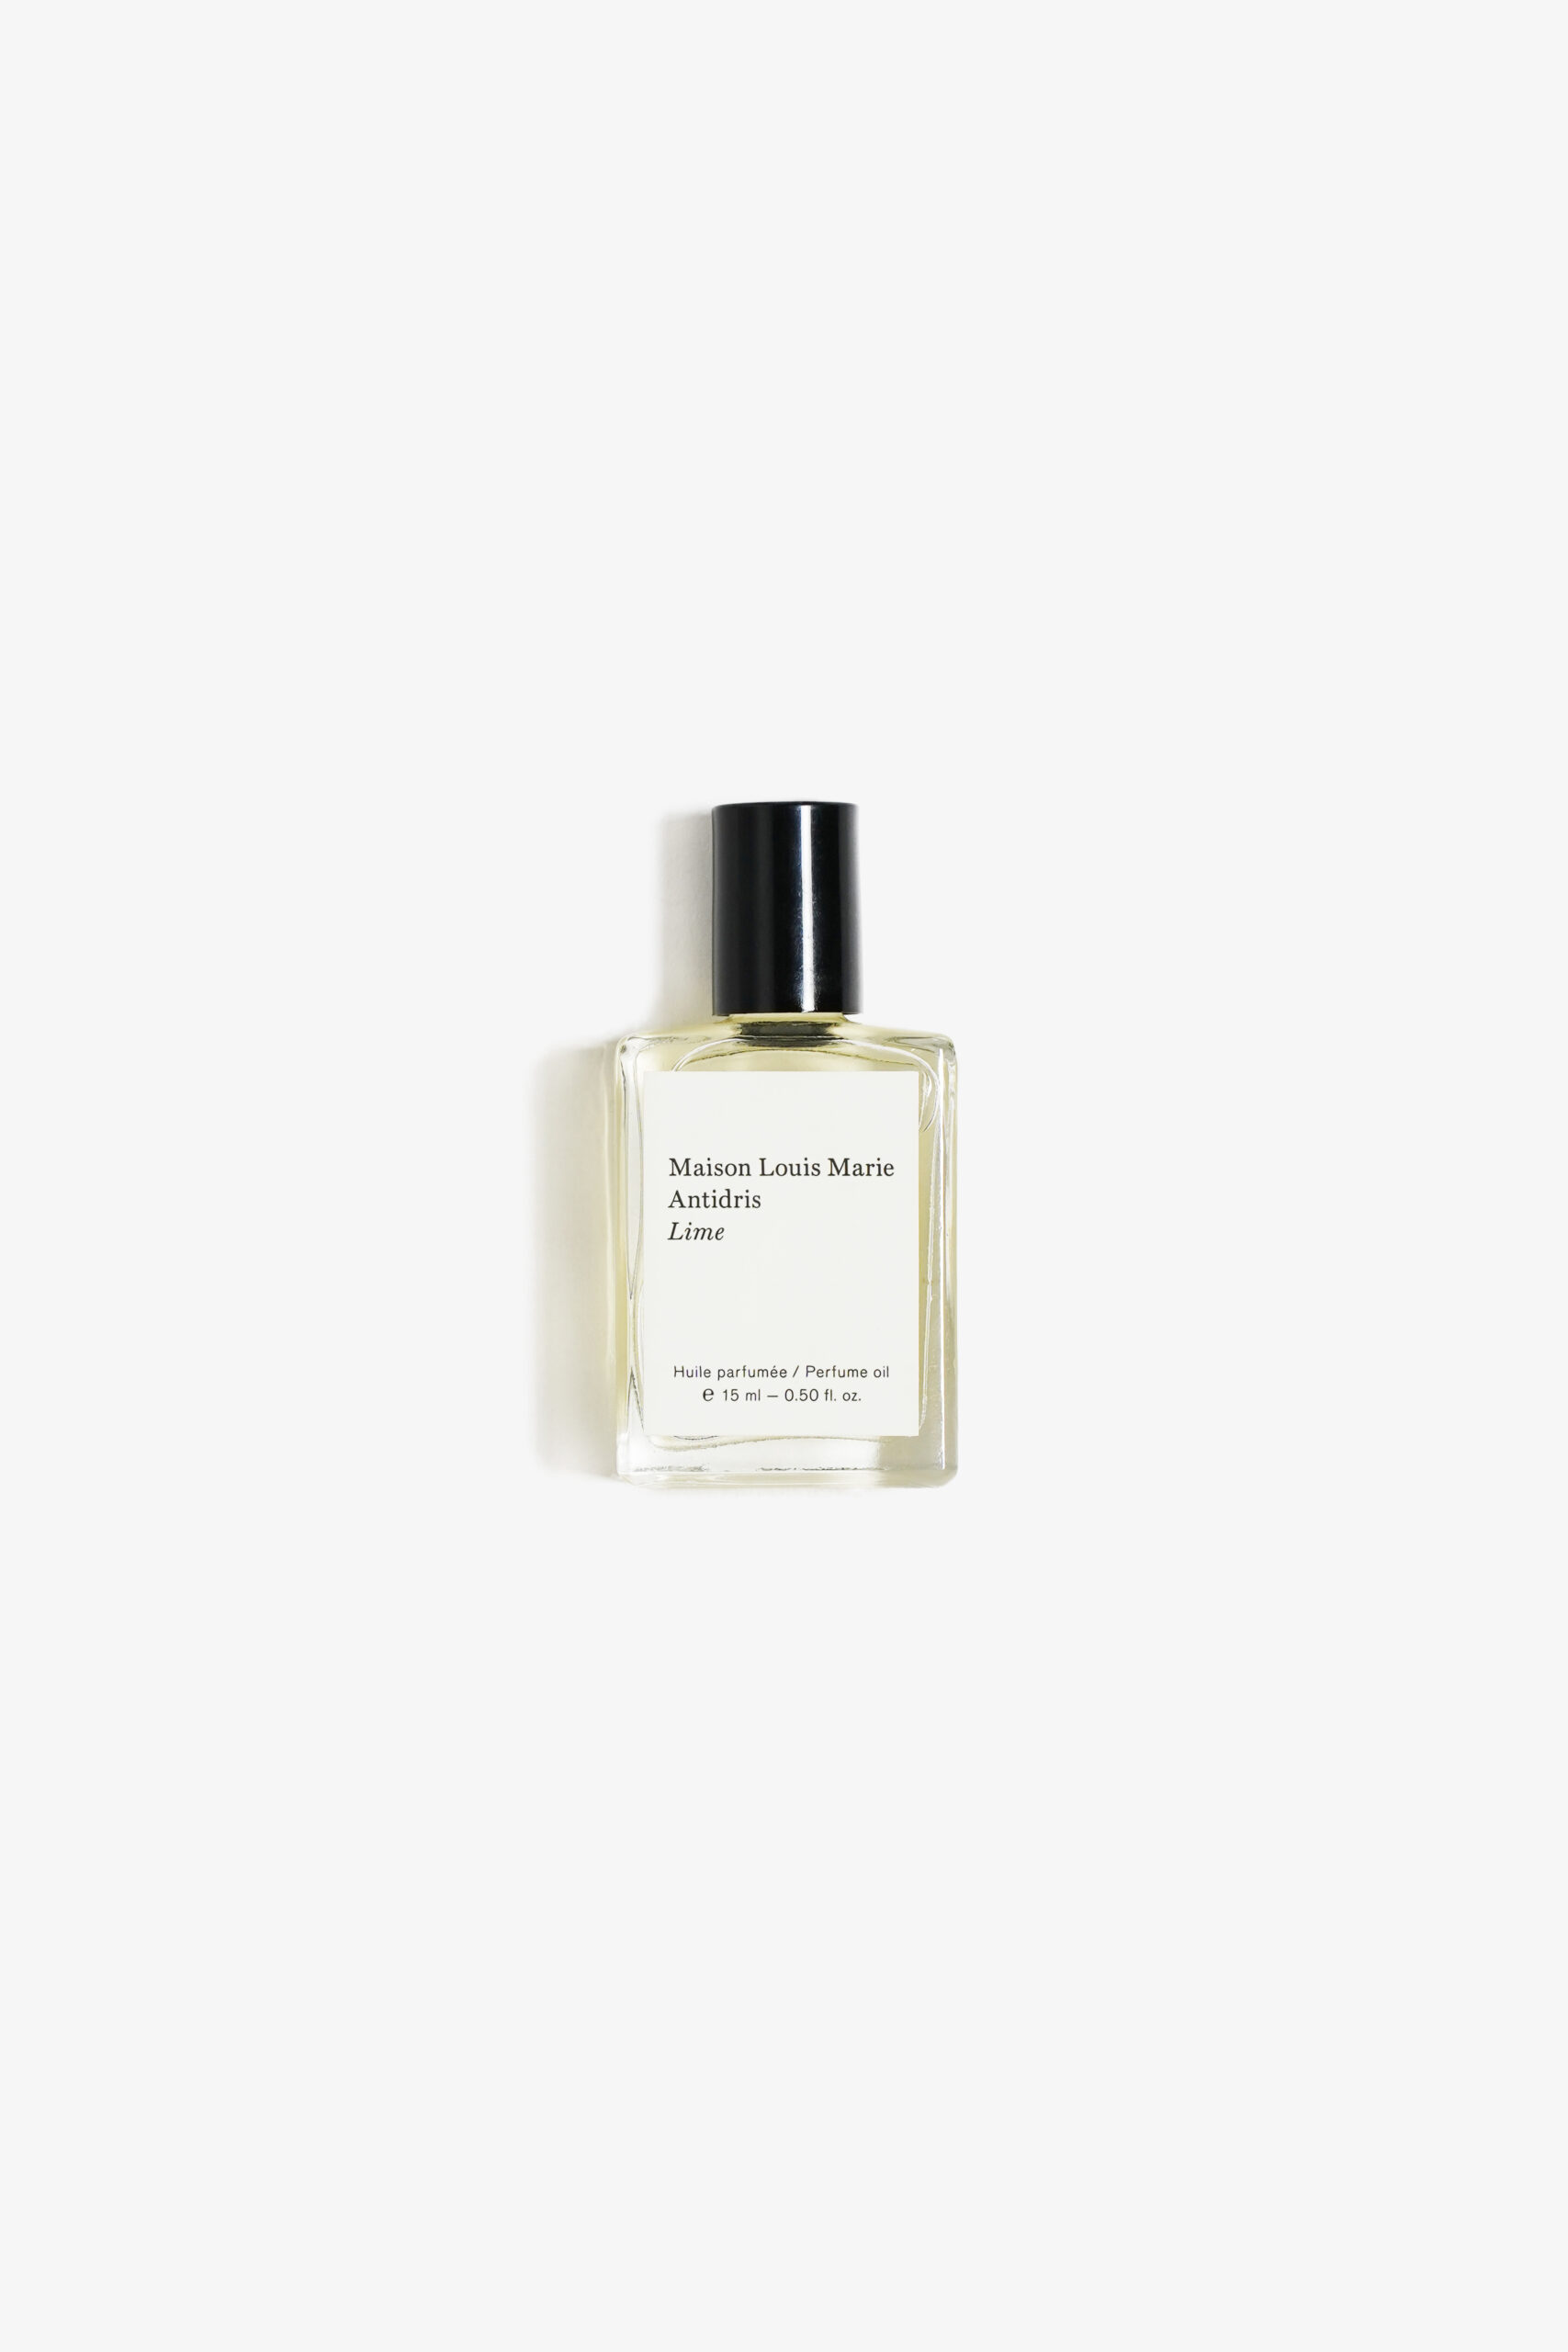 Antidris Lime Perfume oil